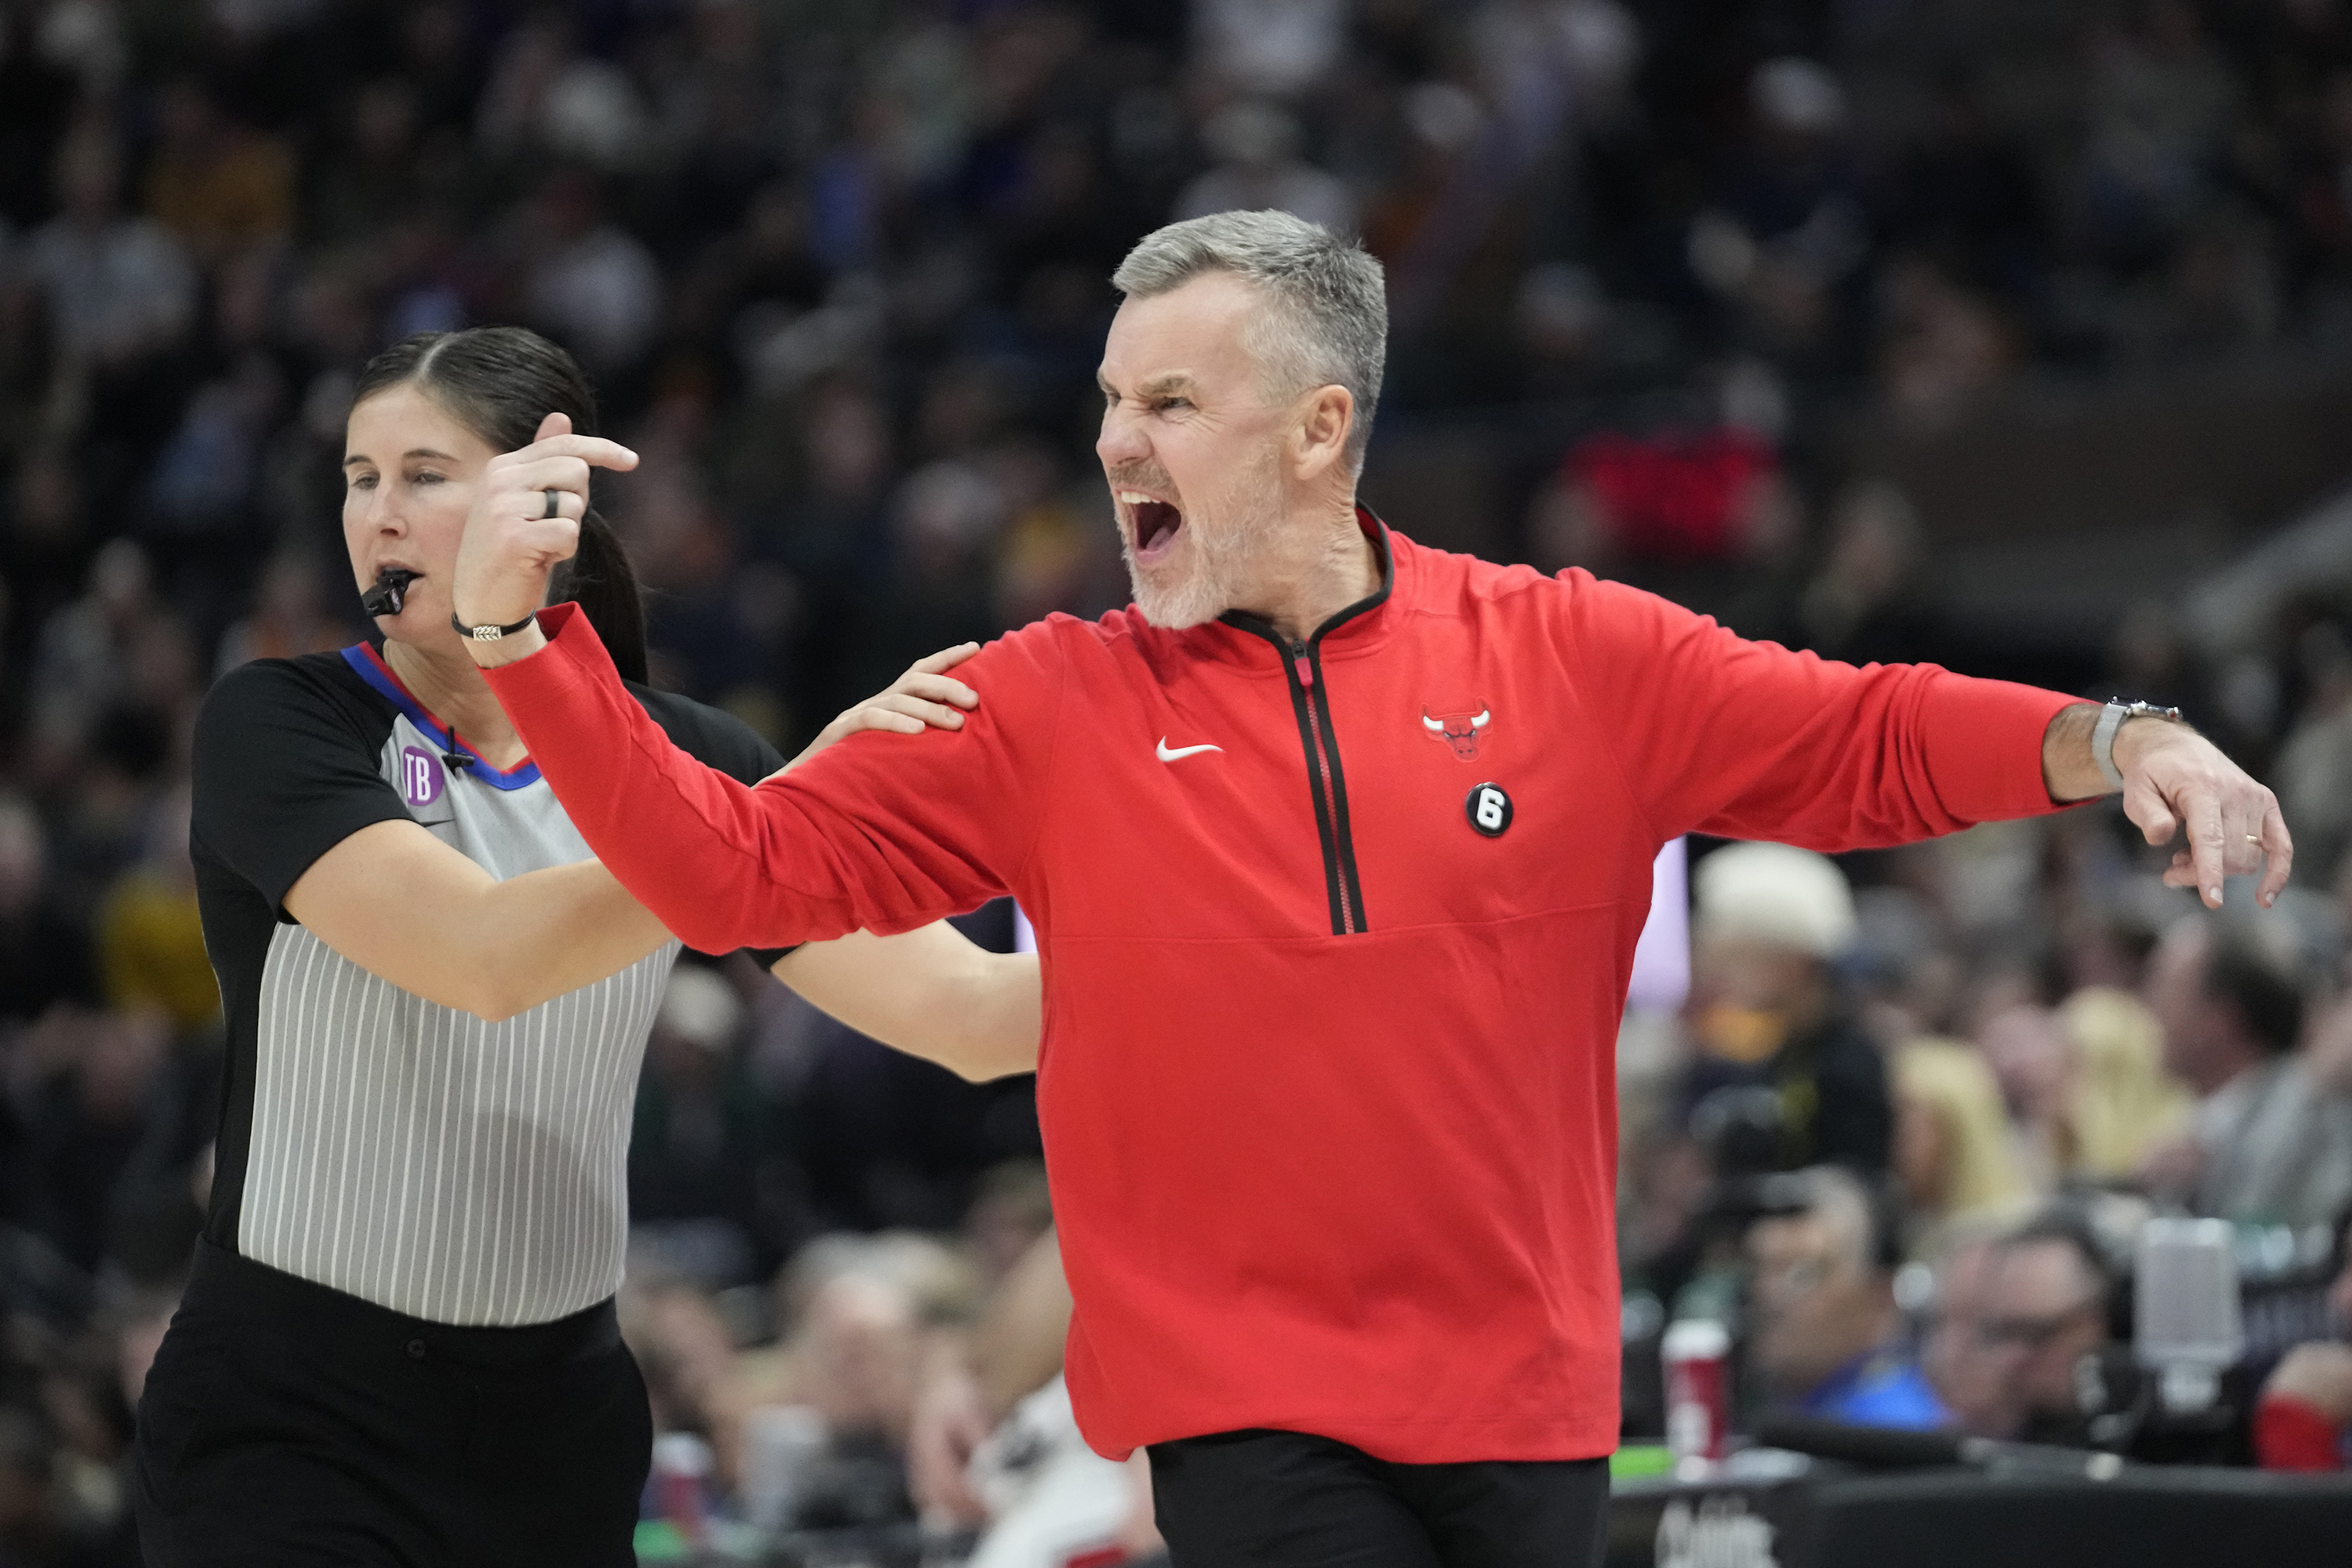 Billy Donovan: Chicago Bulls coach enters COVID-19 protocols